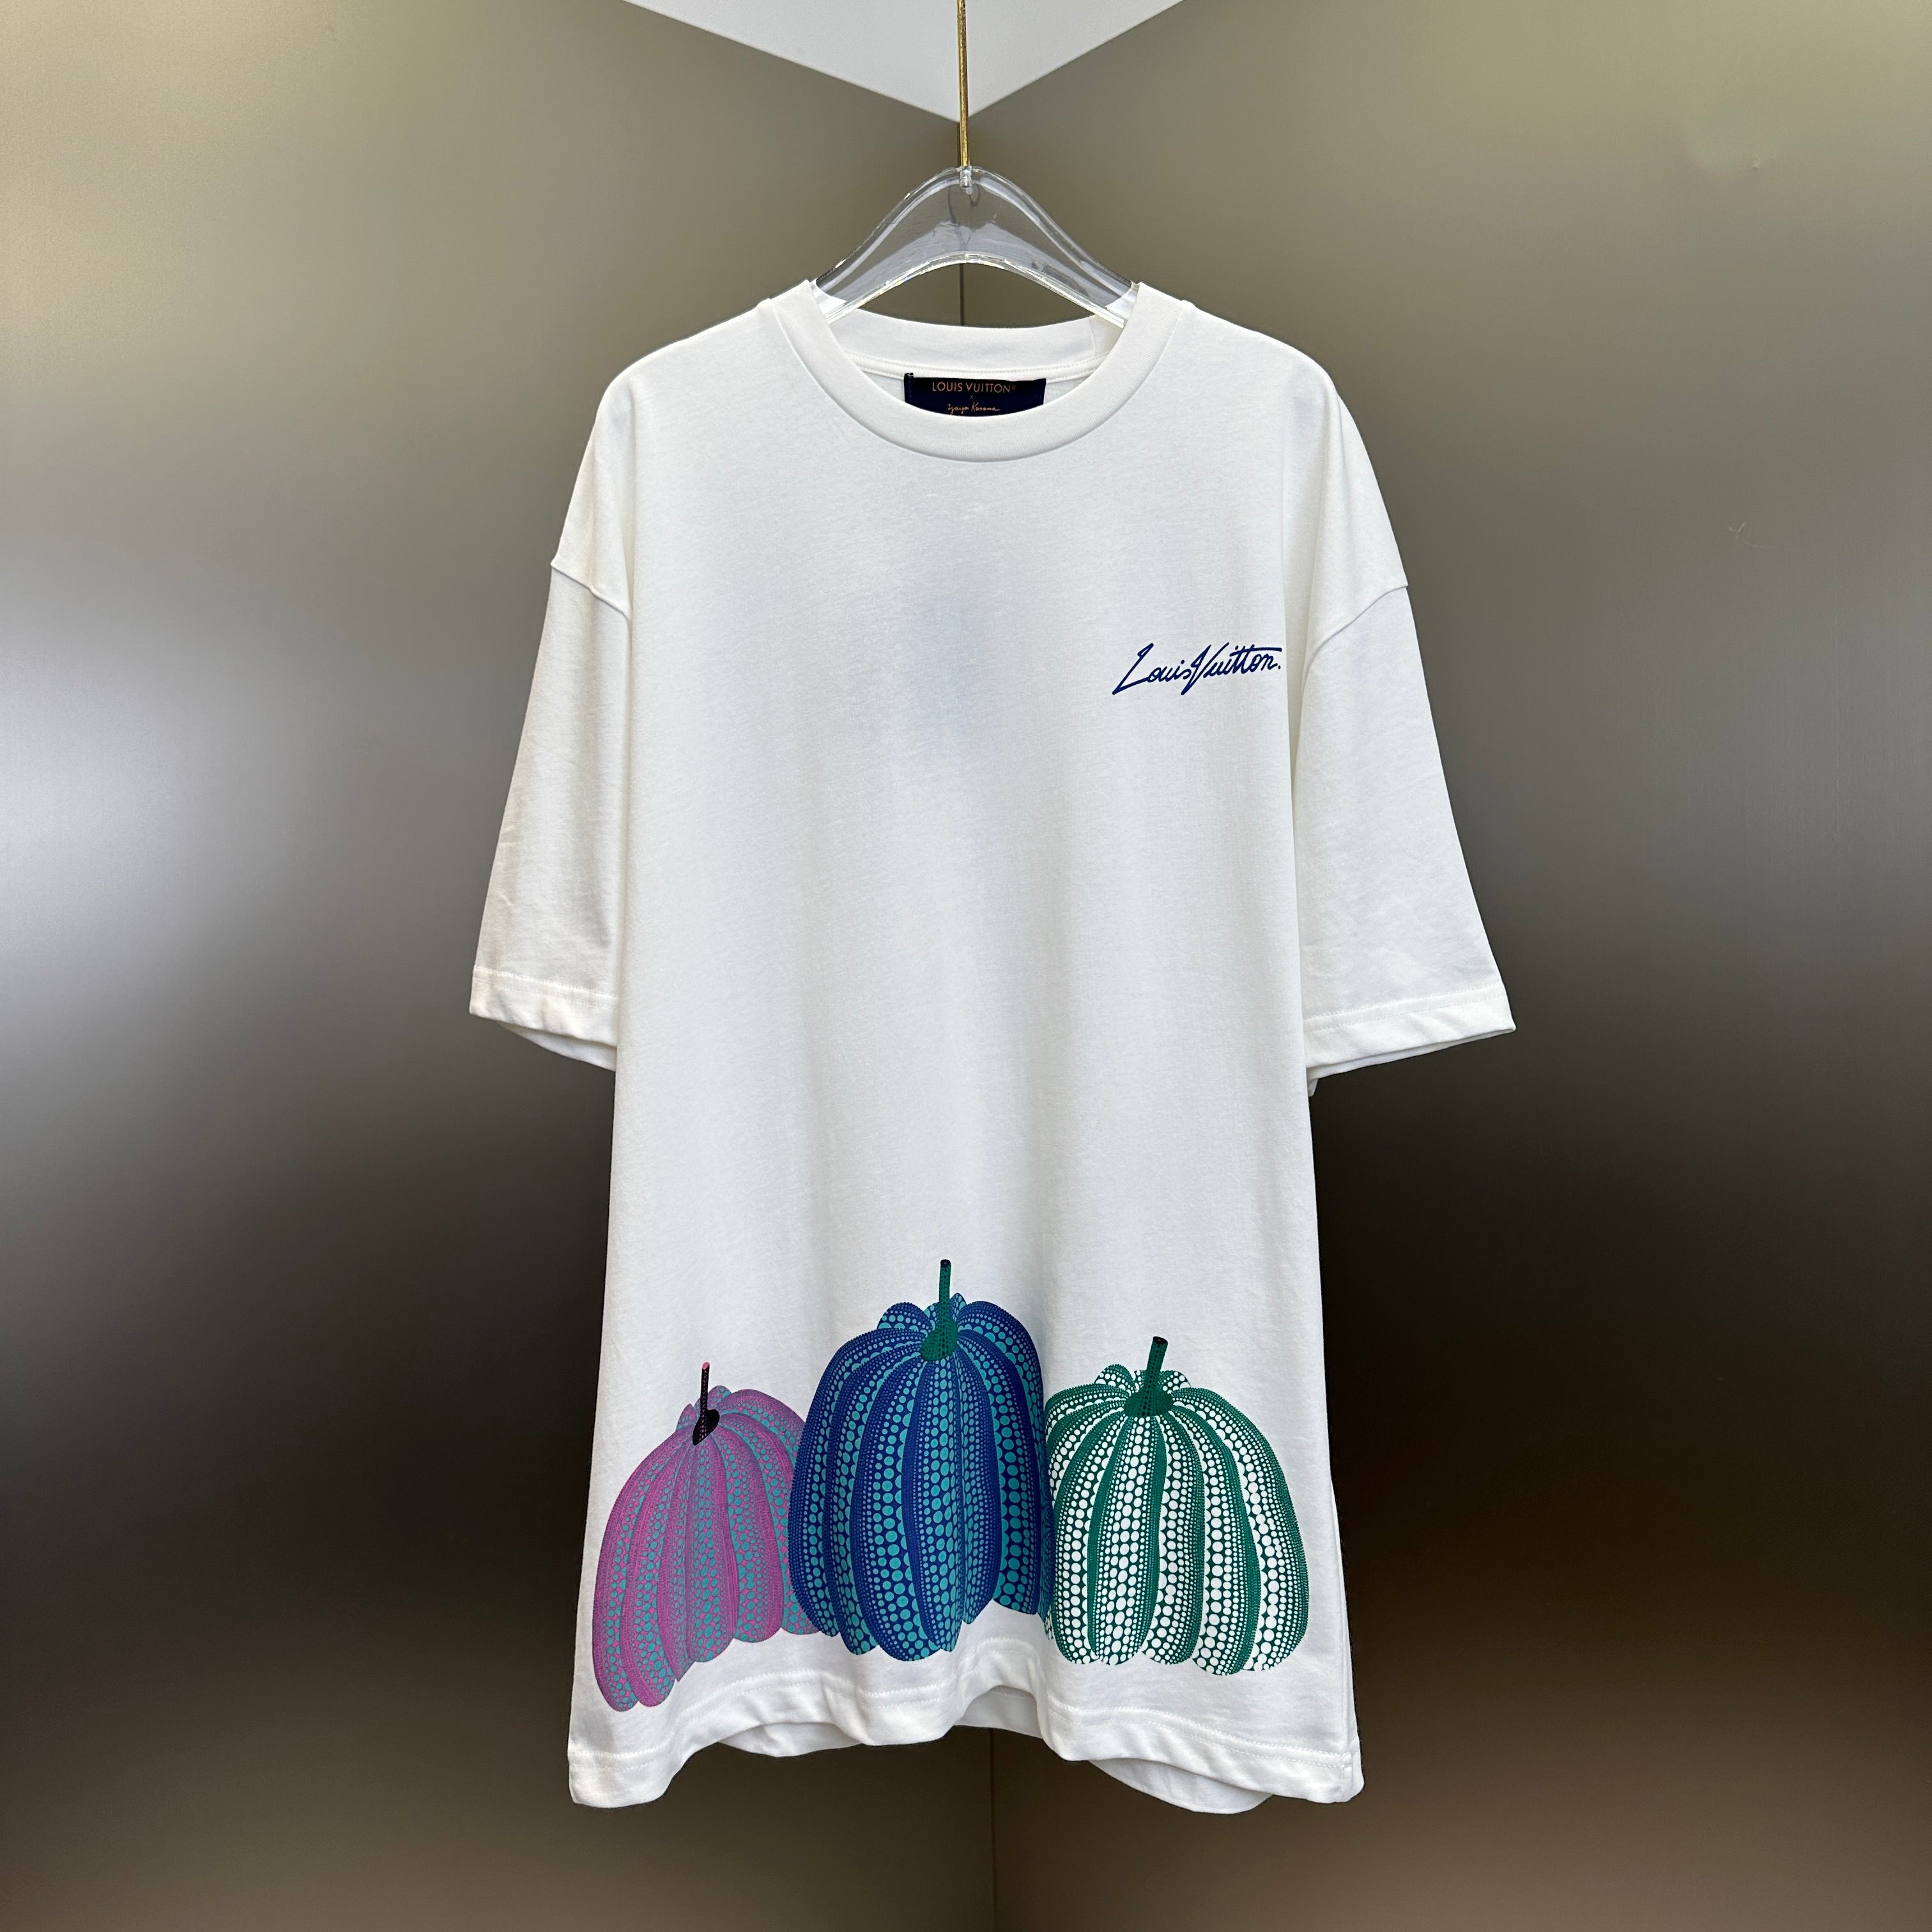 Louis Vuitton Printed Cotton T-Shirt White. Size M0